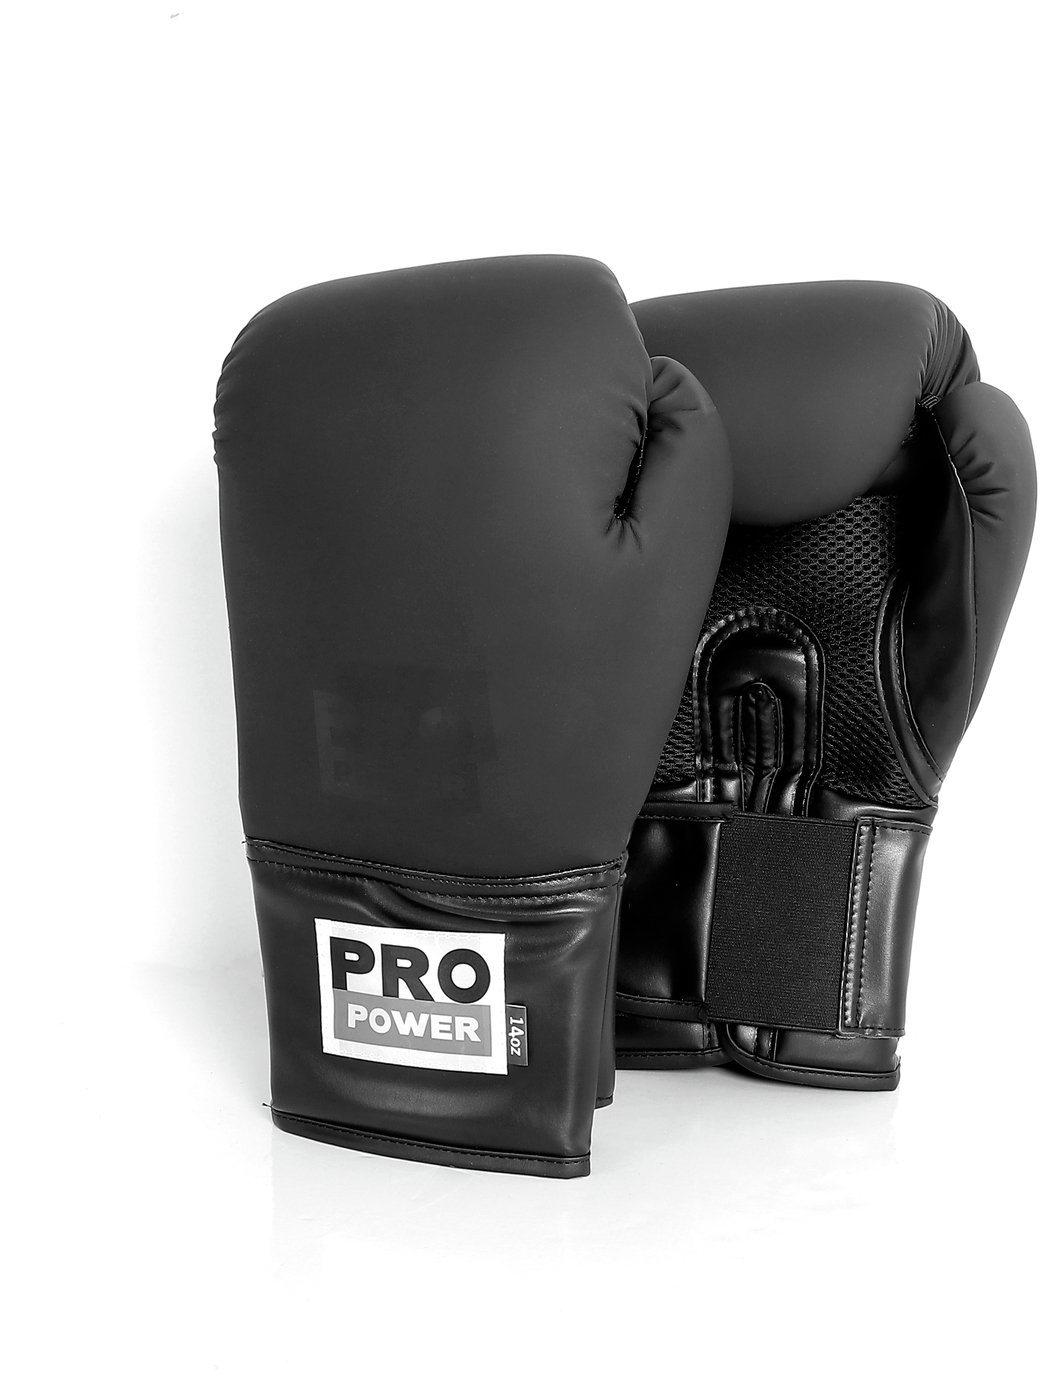 Pro Power 140Z Boxing Gloves - Black